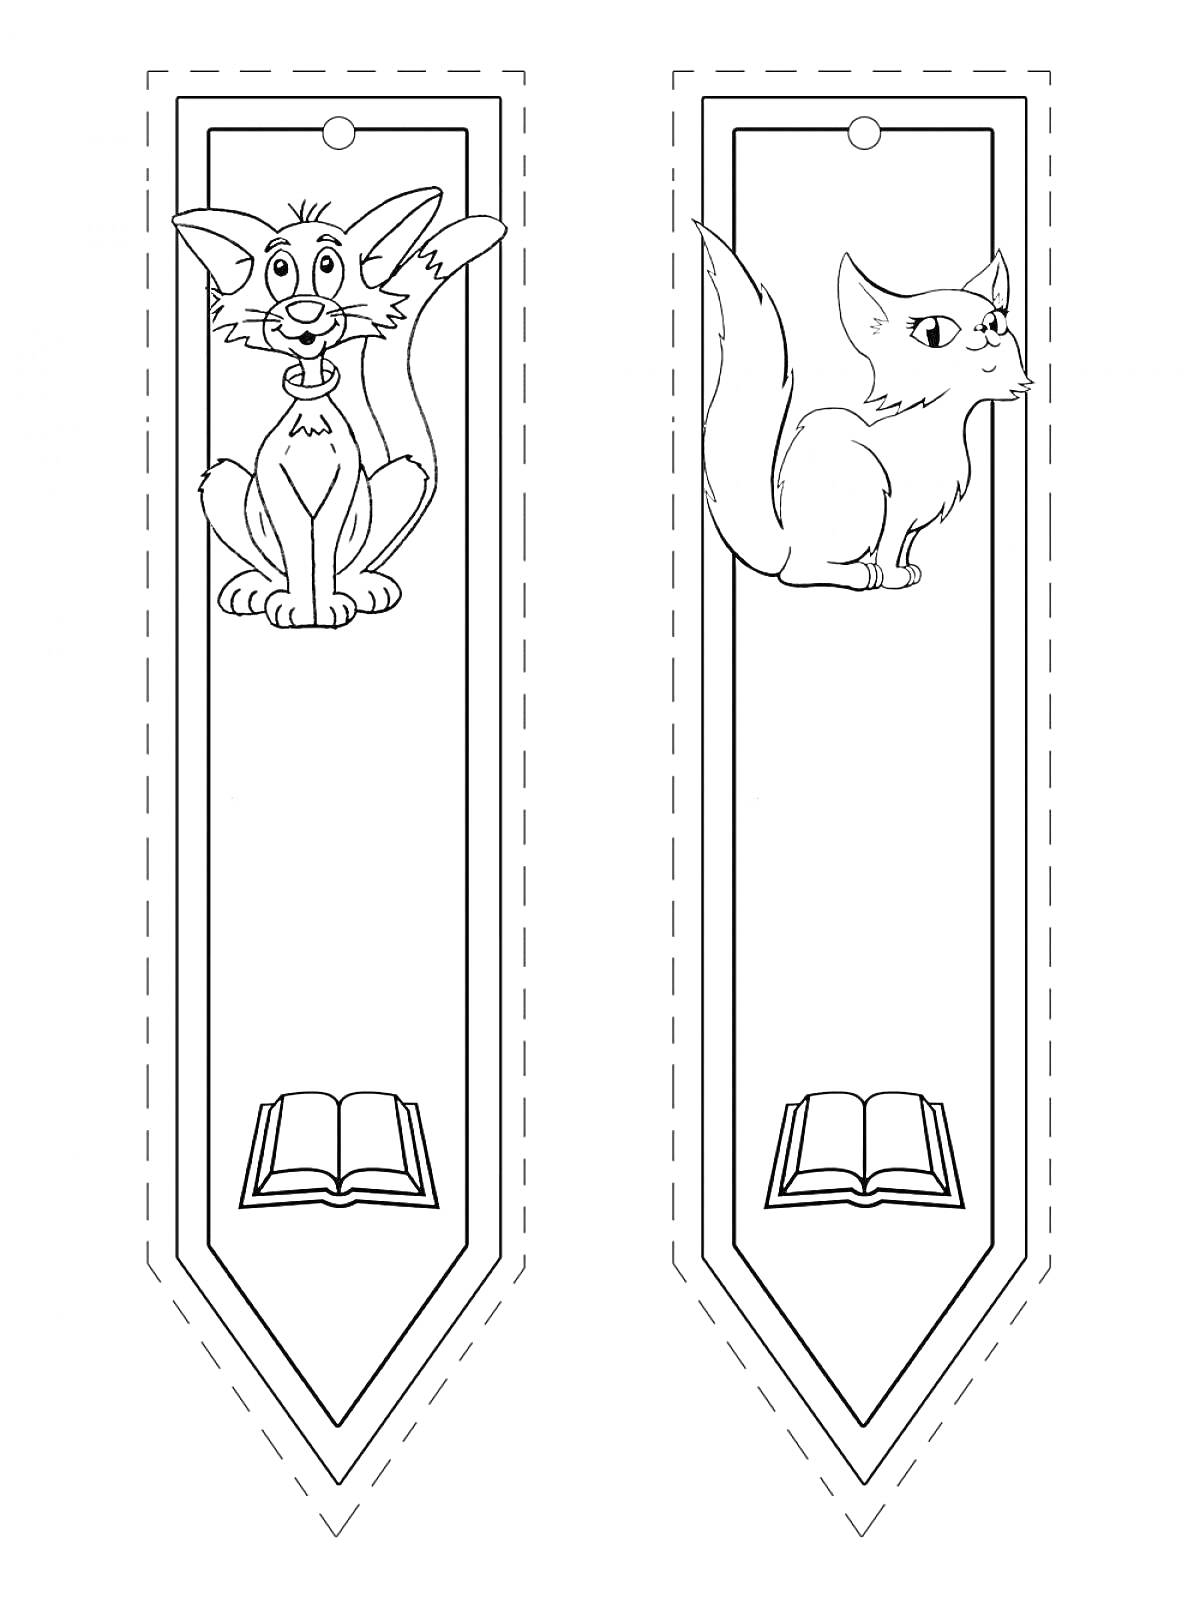 Раскраска Закладки с изображениями кота и кошки и символом книги